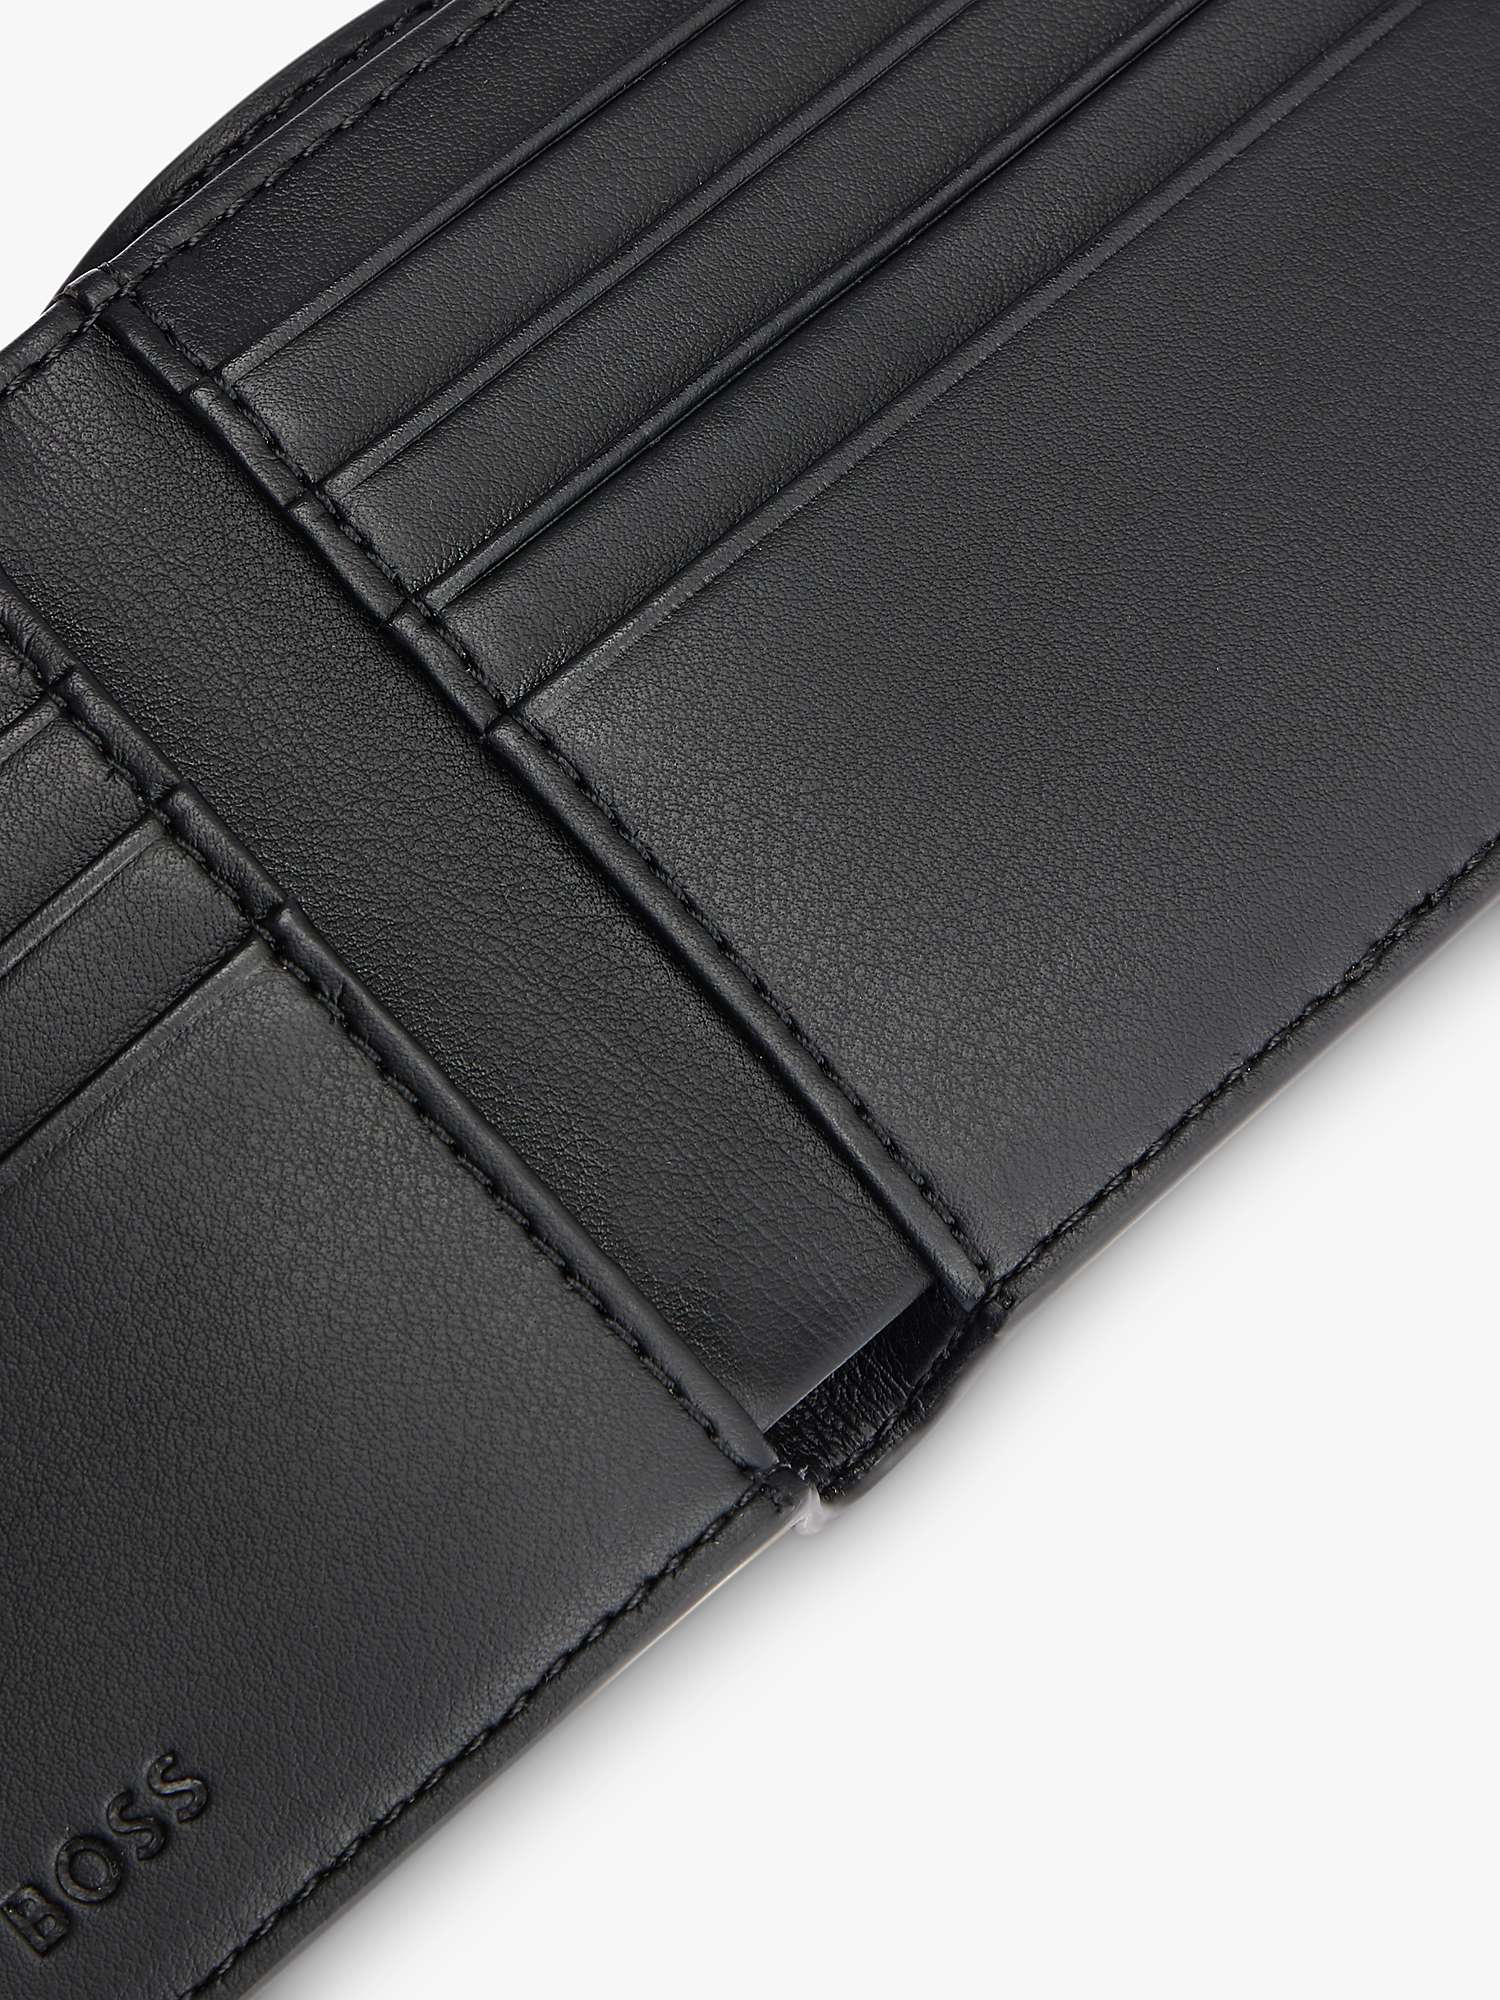 Buy BOSS Ray Faux Leather Siganture Stripe Wallet, Black Online at johnlewis.com